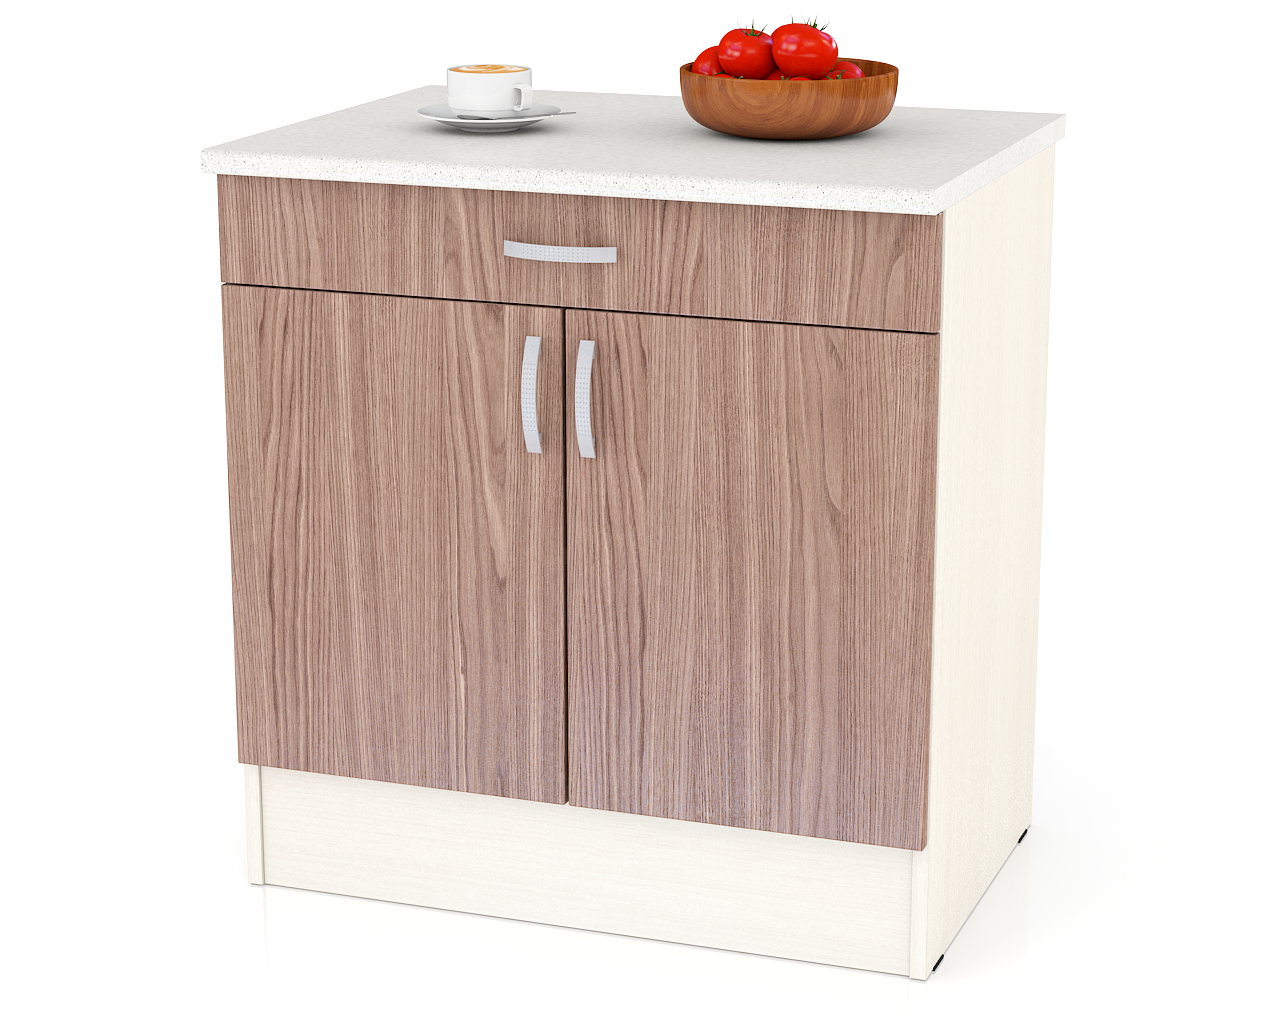 Кухонный стол МД-ШН1Я800 Стол с 1 ящиком 80 см, цвет дуб/ясень шимо тёмный, ШхГхВ 80х60х85 см.